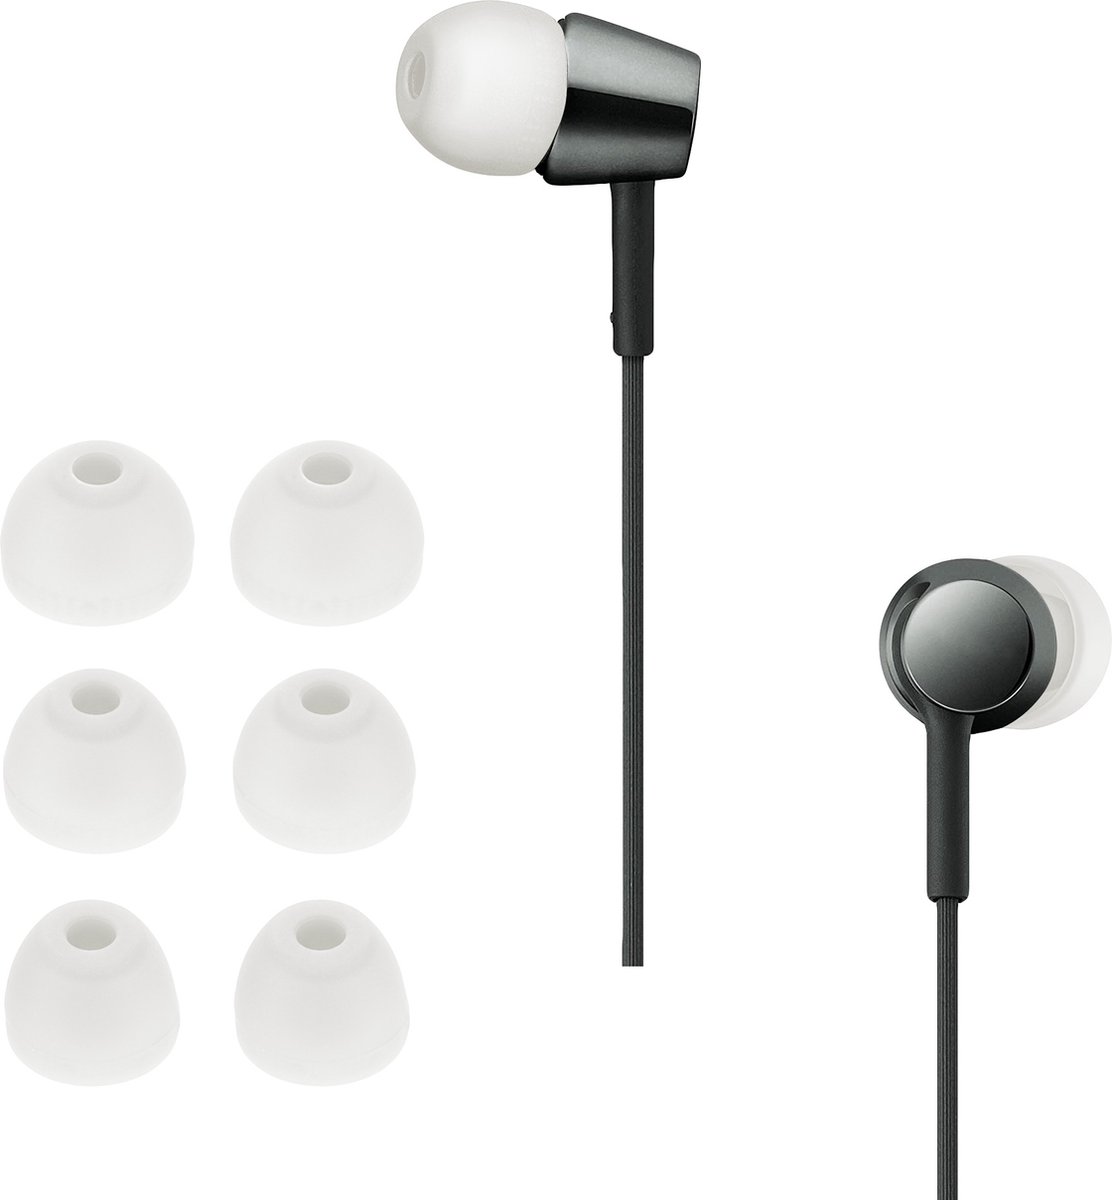 kwmobile 6x cover voor in-ear oortjes voor Sony WI-C300 / WI-C400 / MDR-XB55AP / MDR-EX155AP - Vervangende oordopjes van siliconen in wit - 3 maten